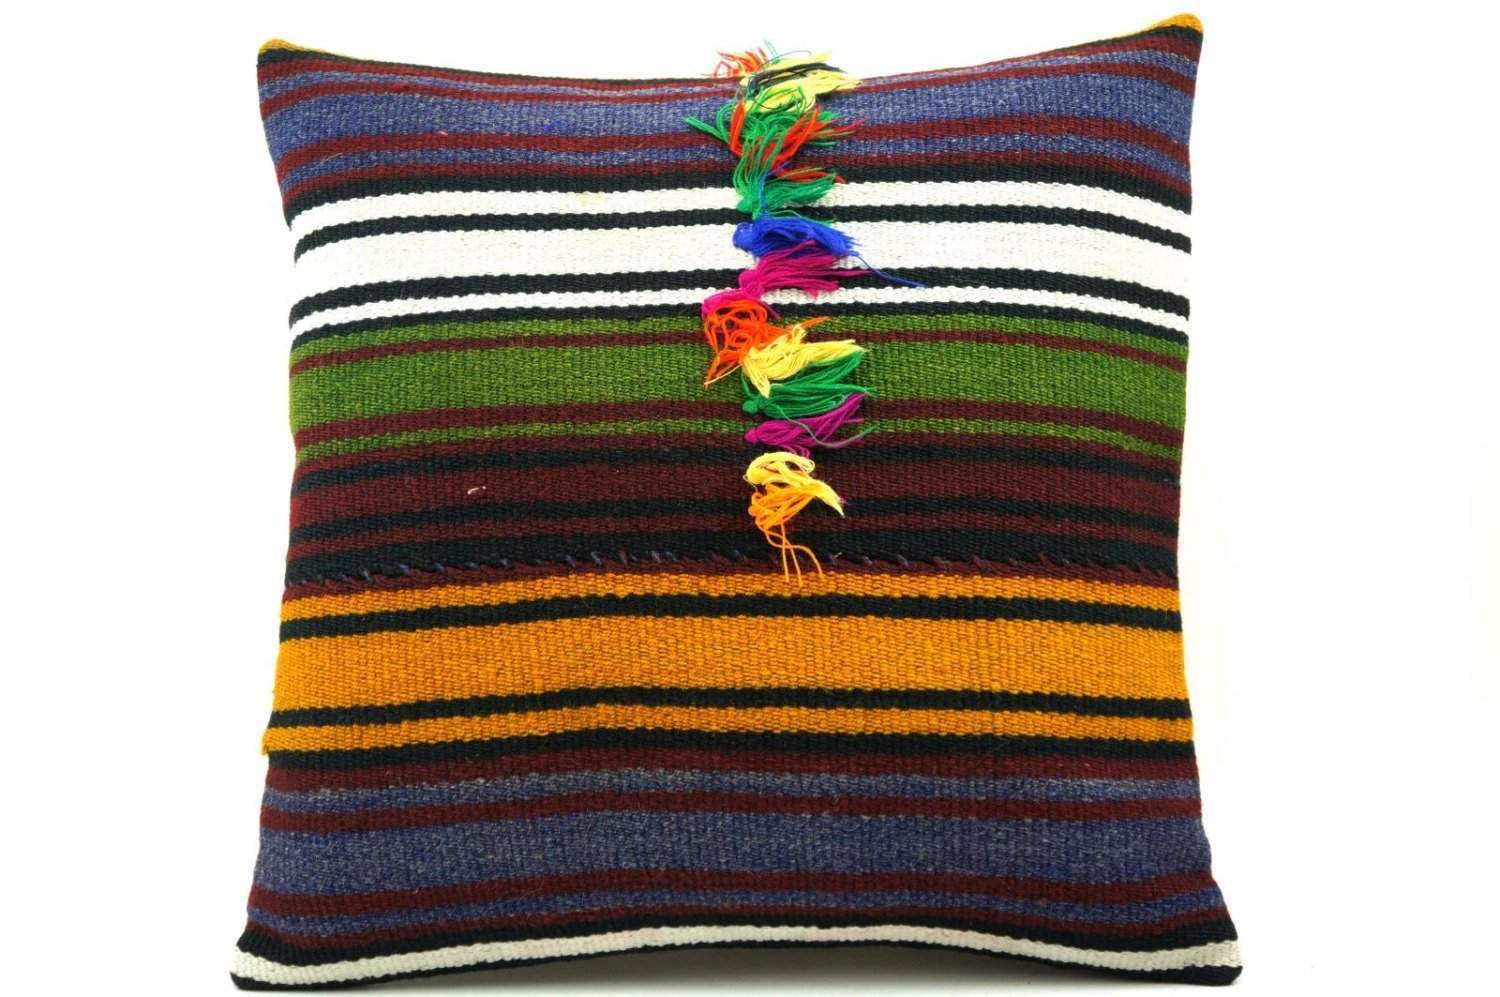 16x16 Vintage Hand Woven Turkish Kilim Pillow  - Old  Kilim Cushion 317,navy blue,green,black,amber,claret red,white , tassel,striped - kilimpillowstore
 - 1